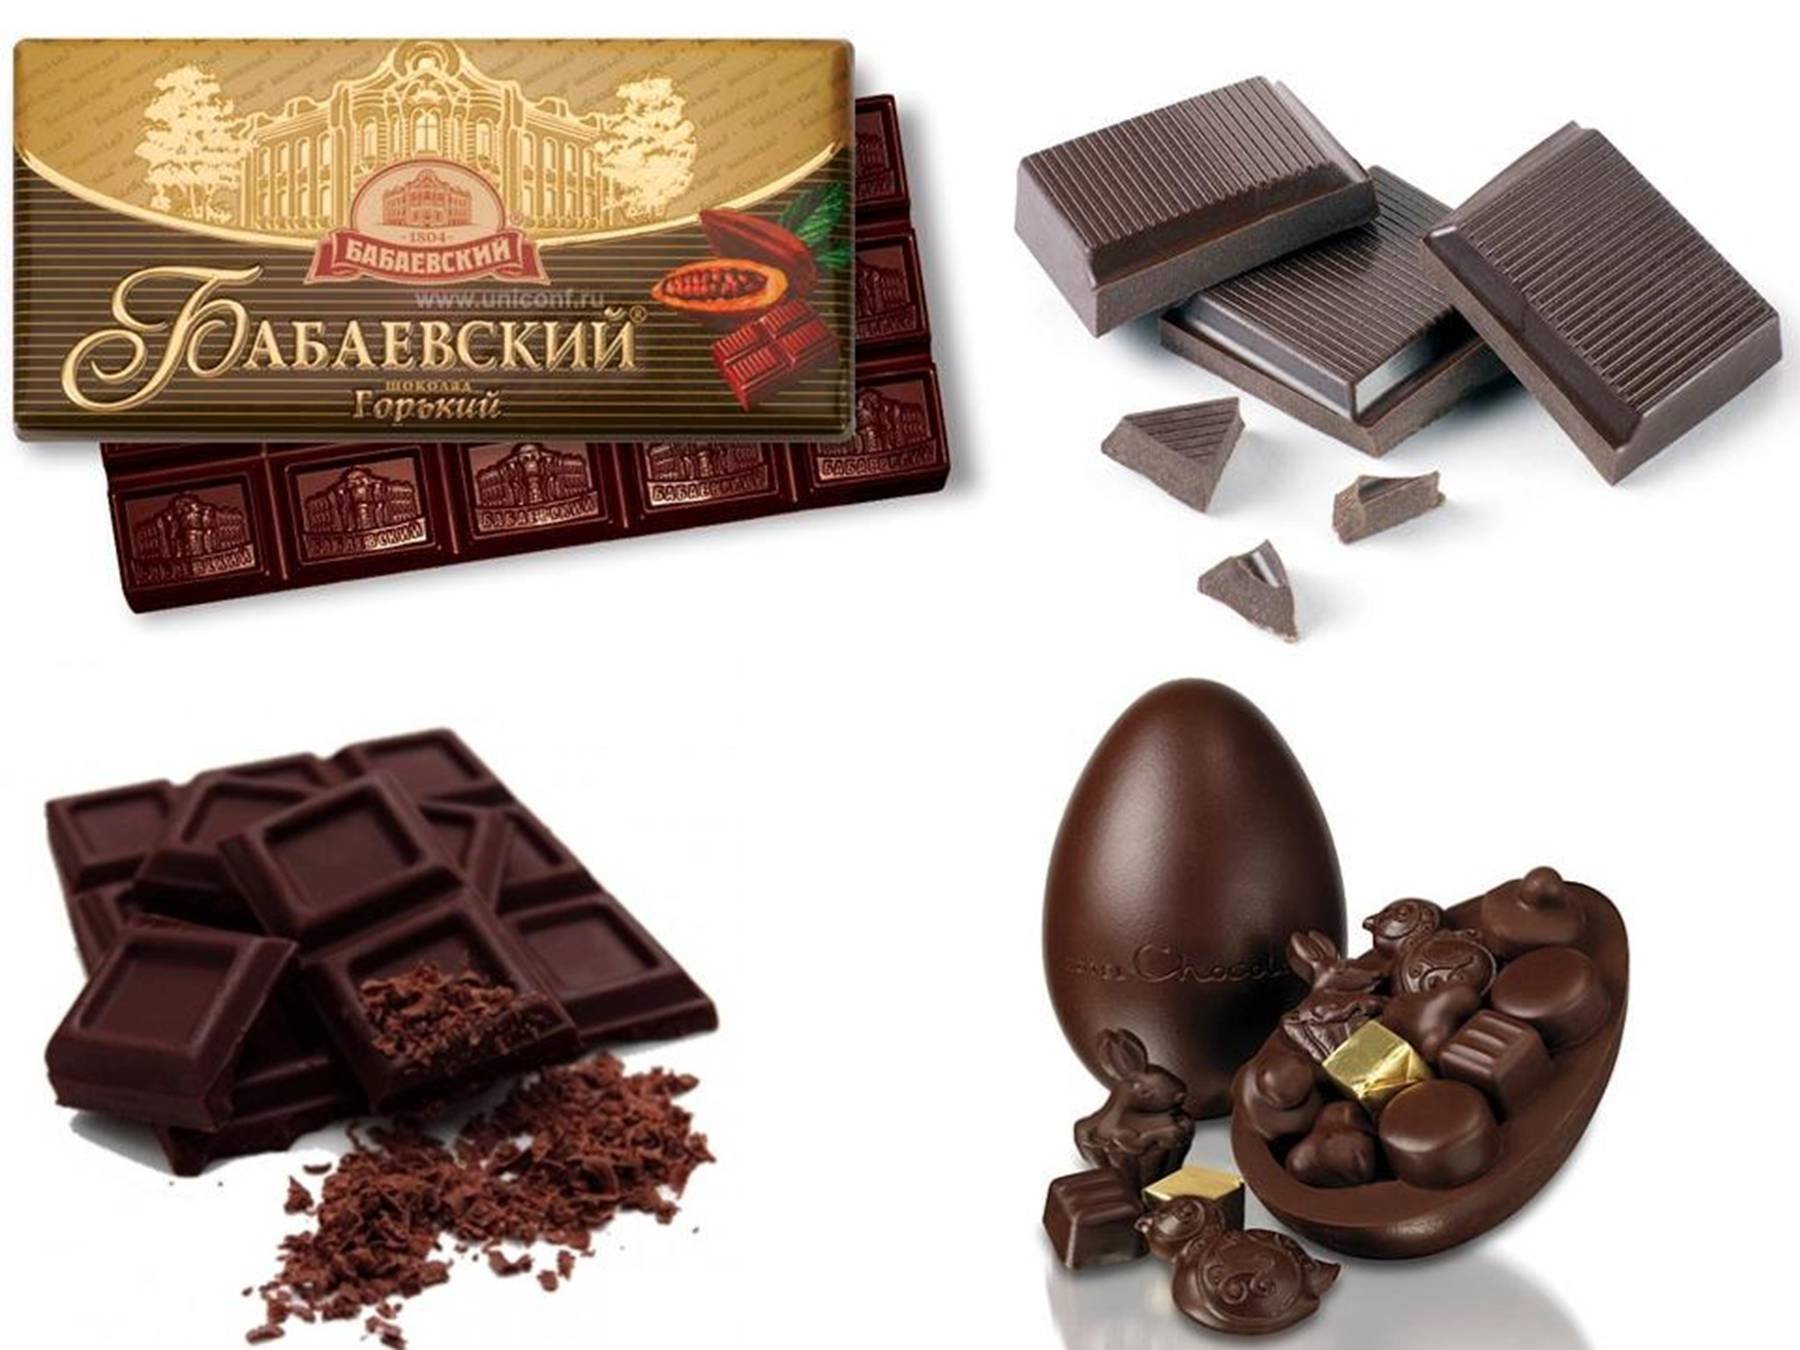 Фабрика горького шоколада. Шоколад. Полезный шоколад. Шоколад Горький. Проект про шоколад.